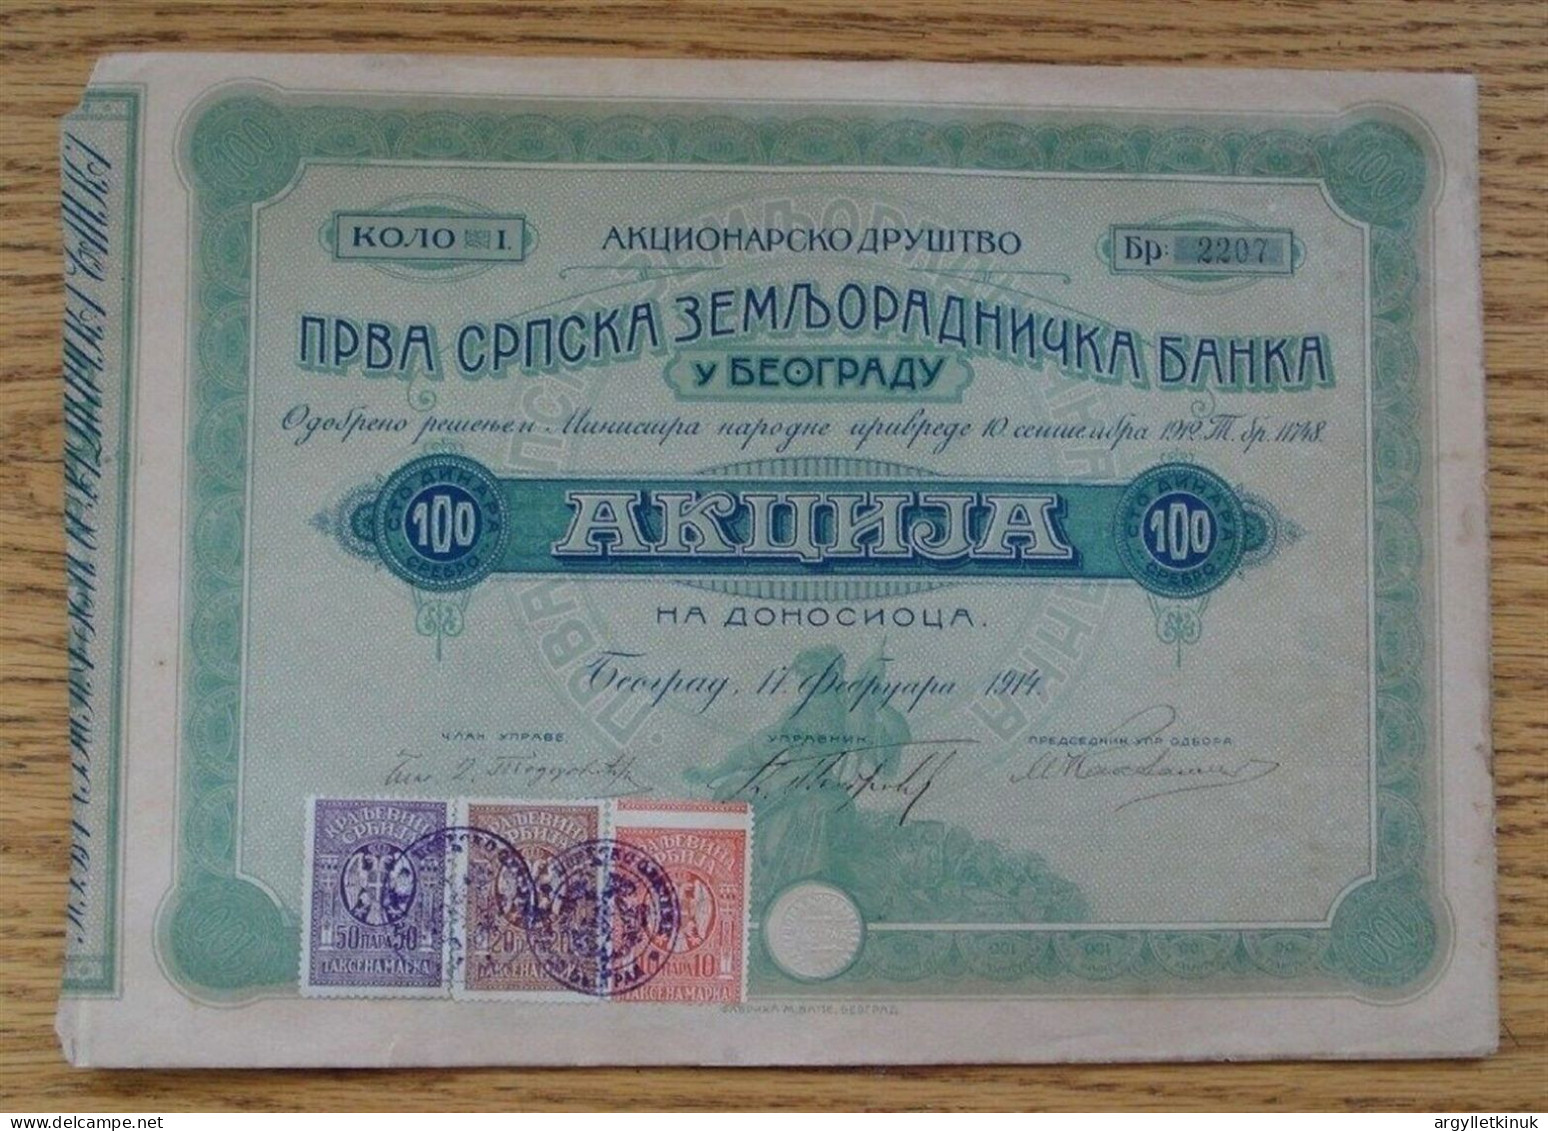 FINE 100 SHARE CERTIFICATE FOR THE SERBIAN LAND BANK BELGRADE 17 FEBRUARY 1914 - Banco & Caja De Ahorros